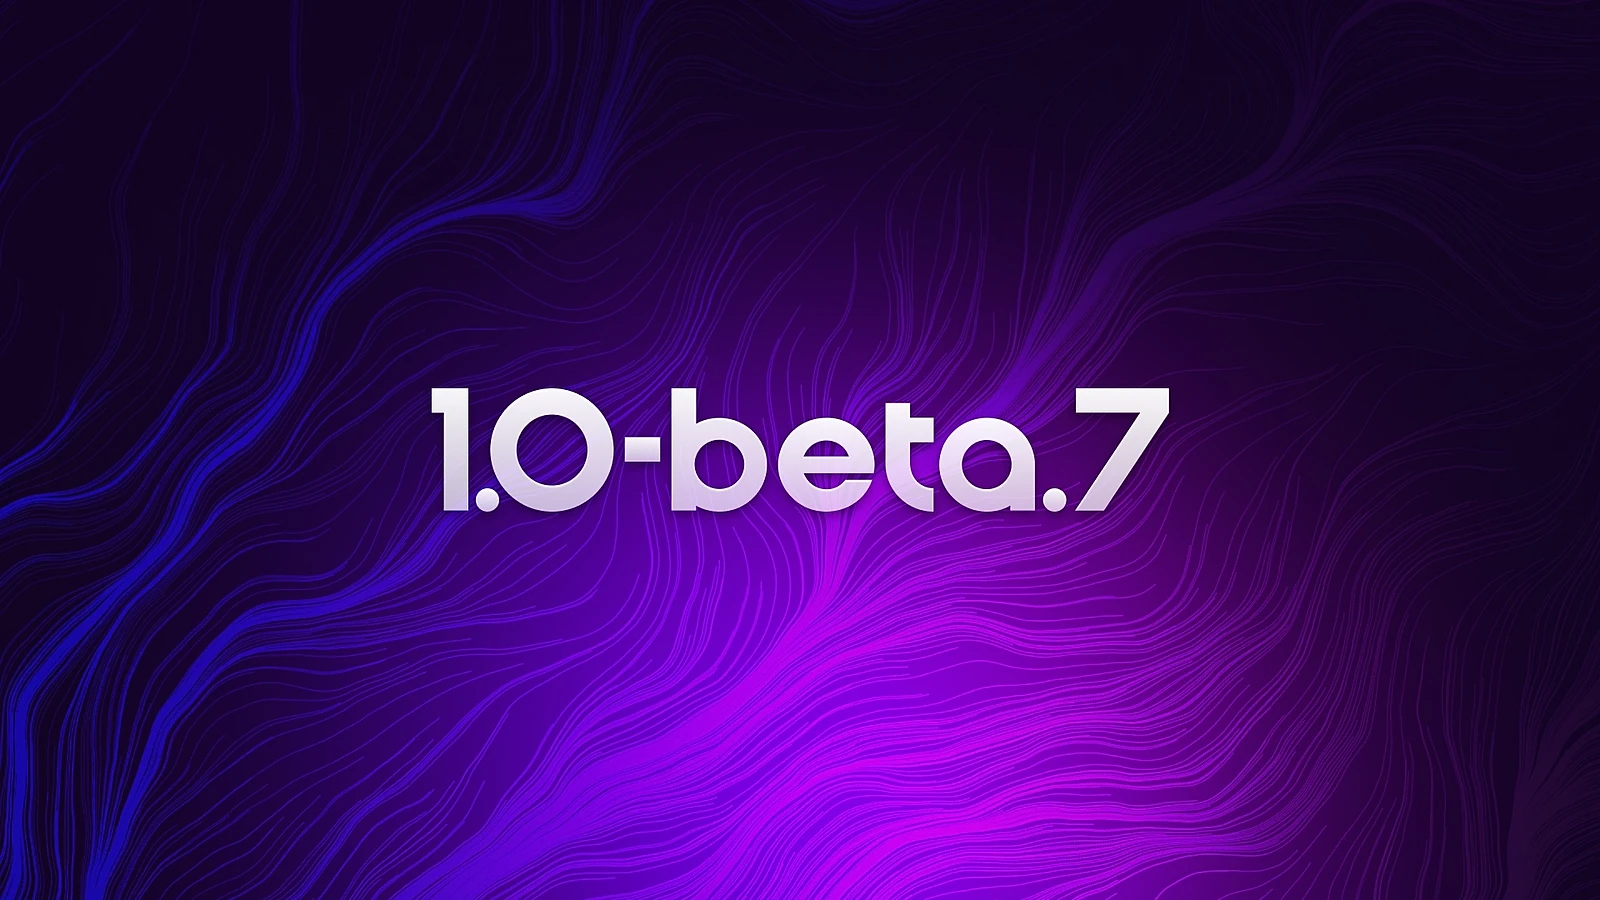 Release v1.0.0-beta.7